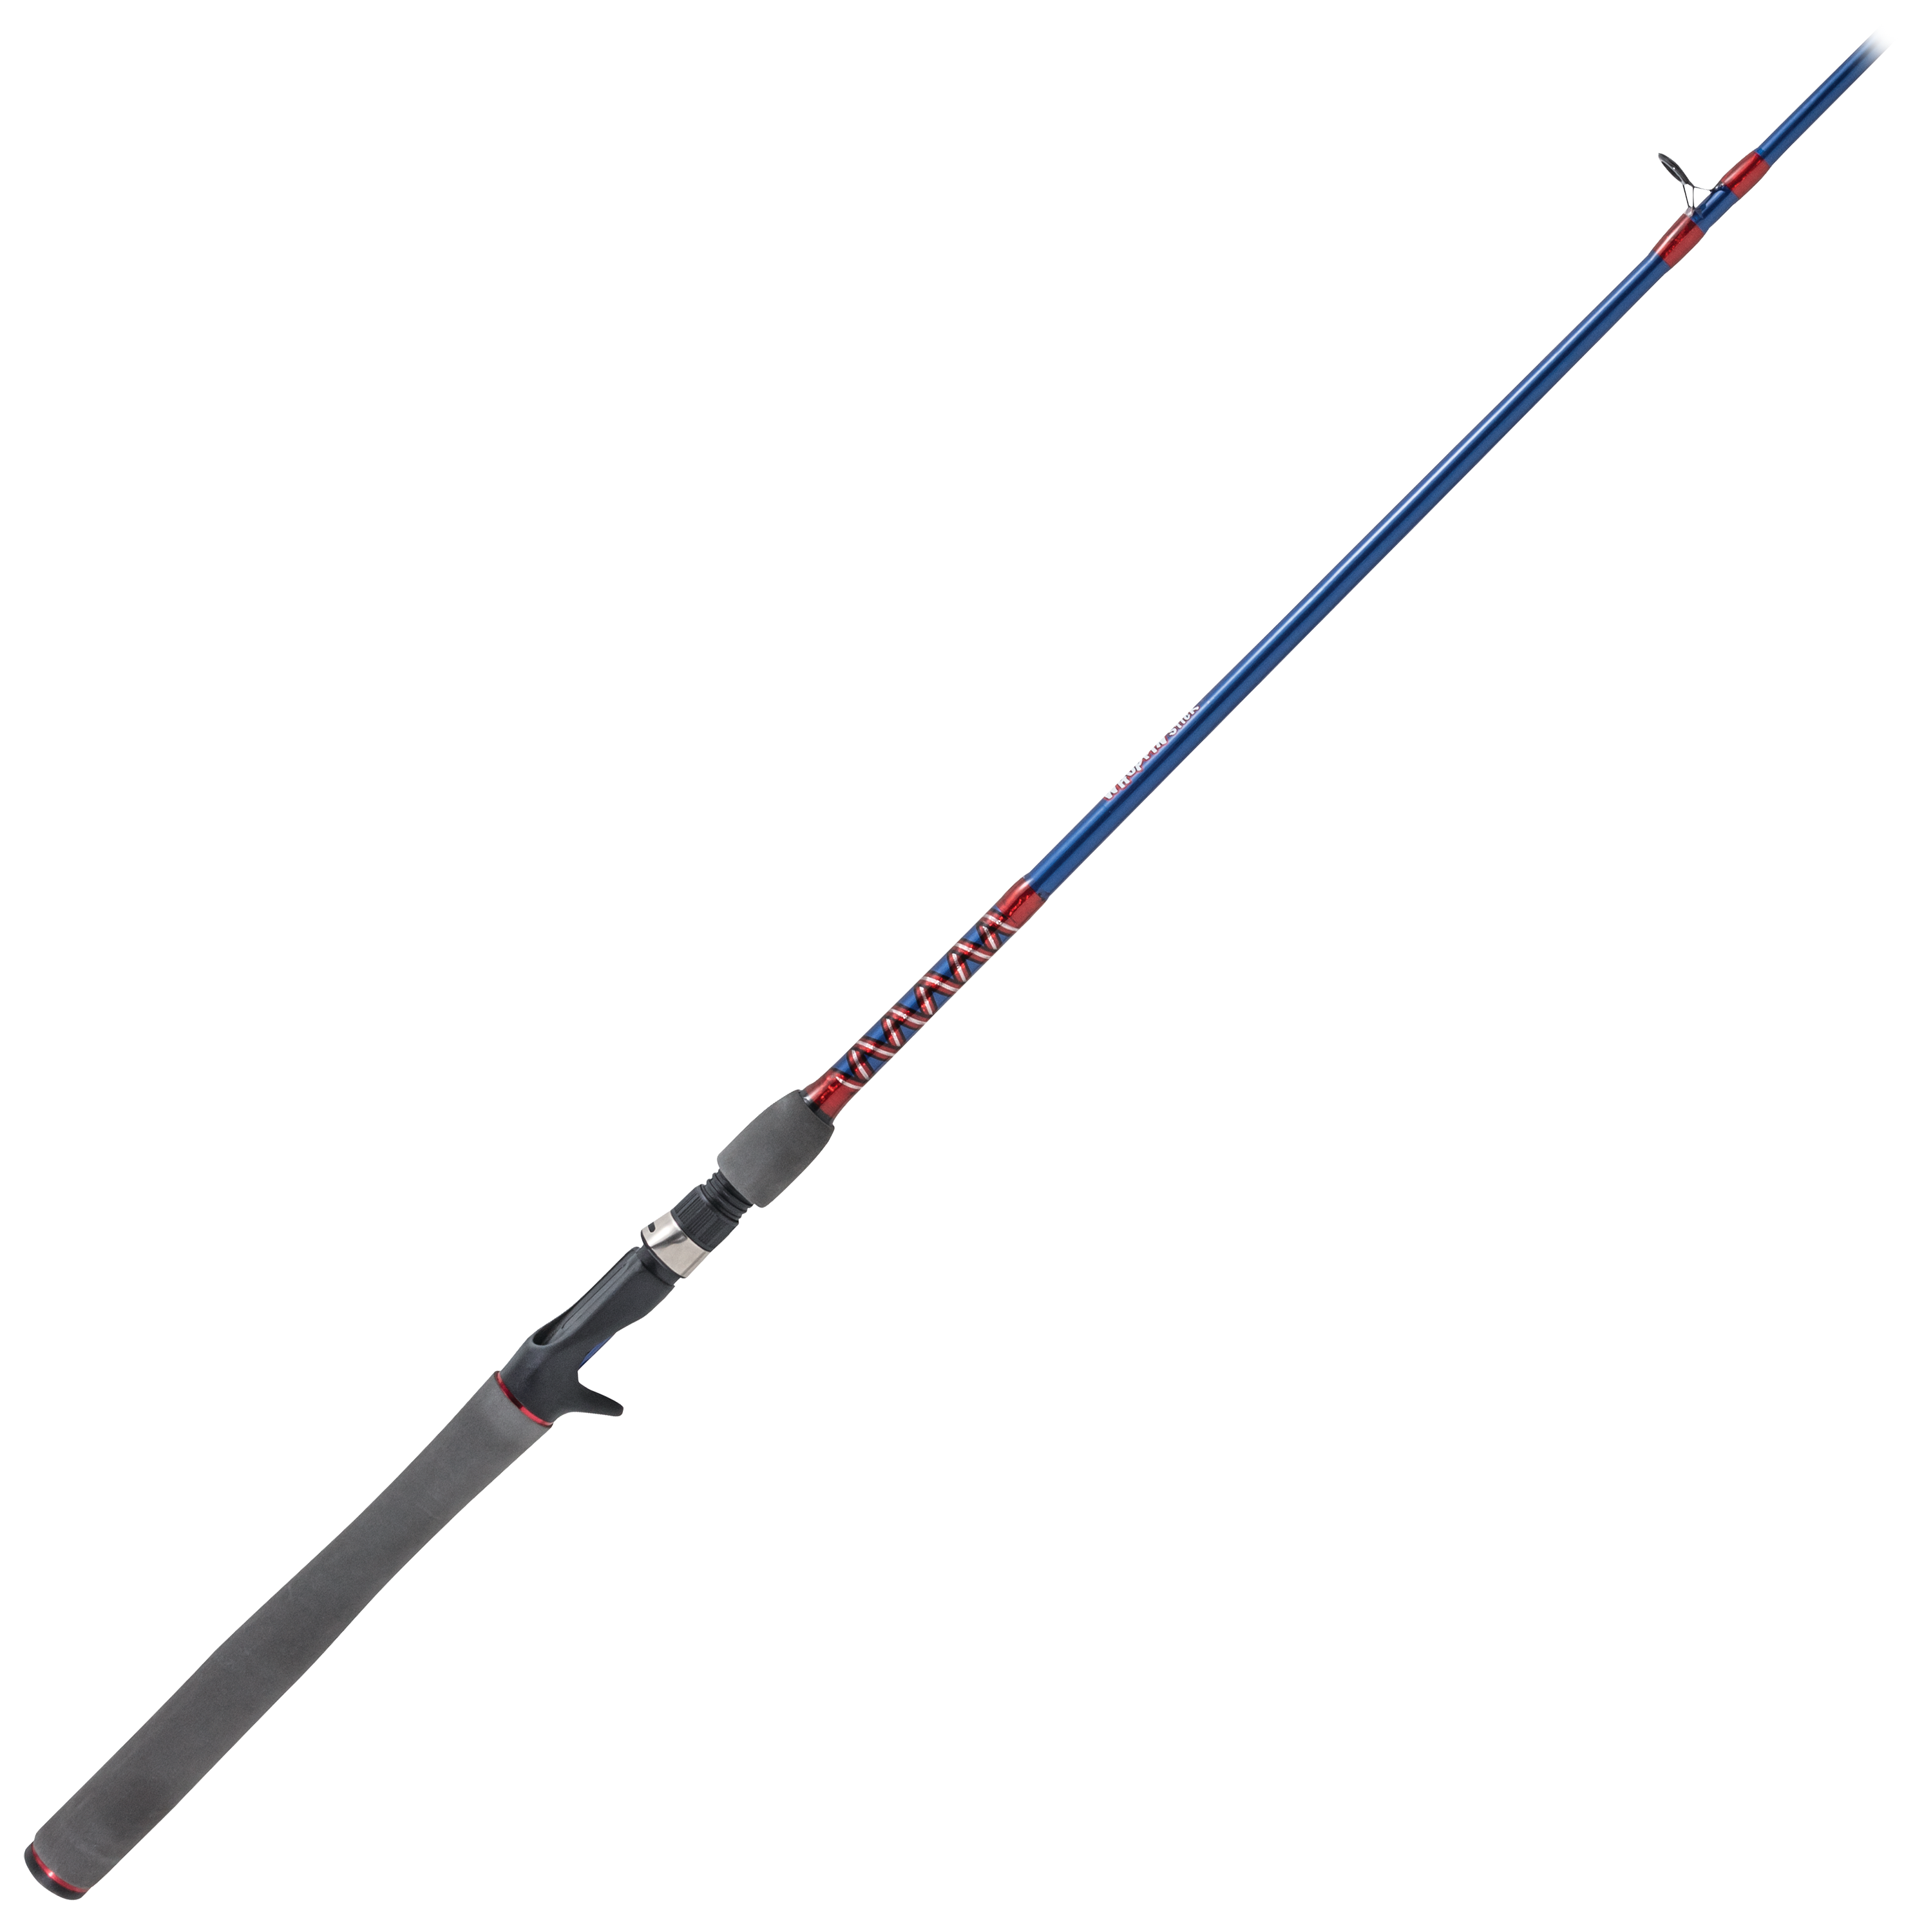 Bass Pro Shops Whuppin' Stick Casting Rod - 7' - Medium